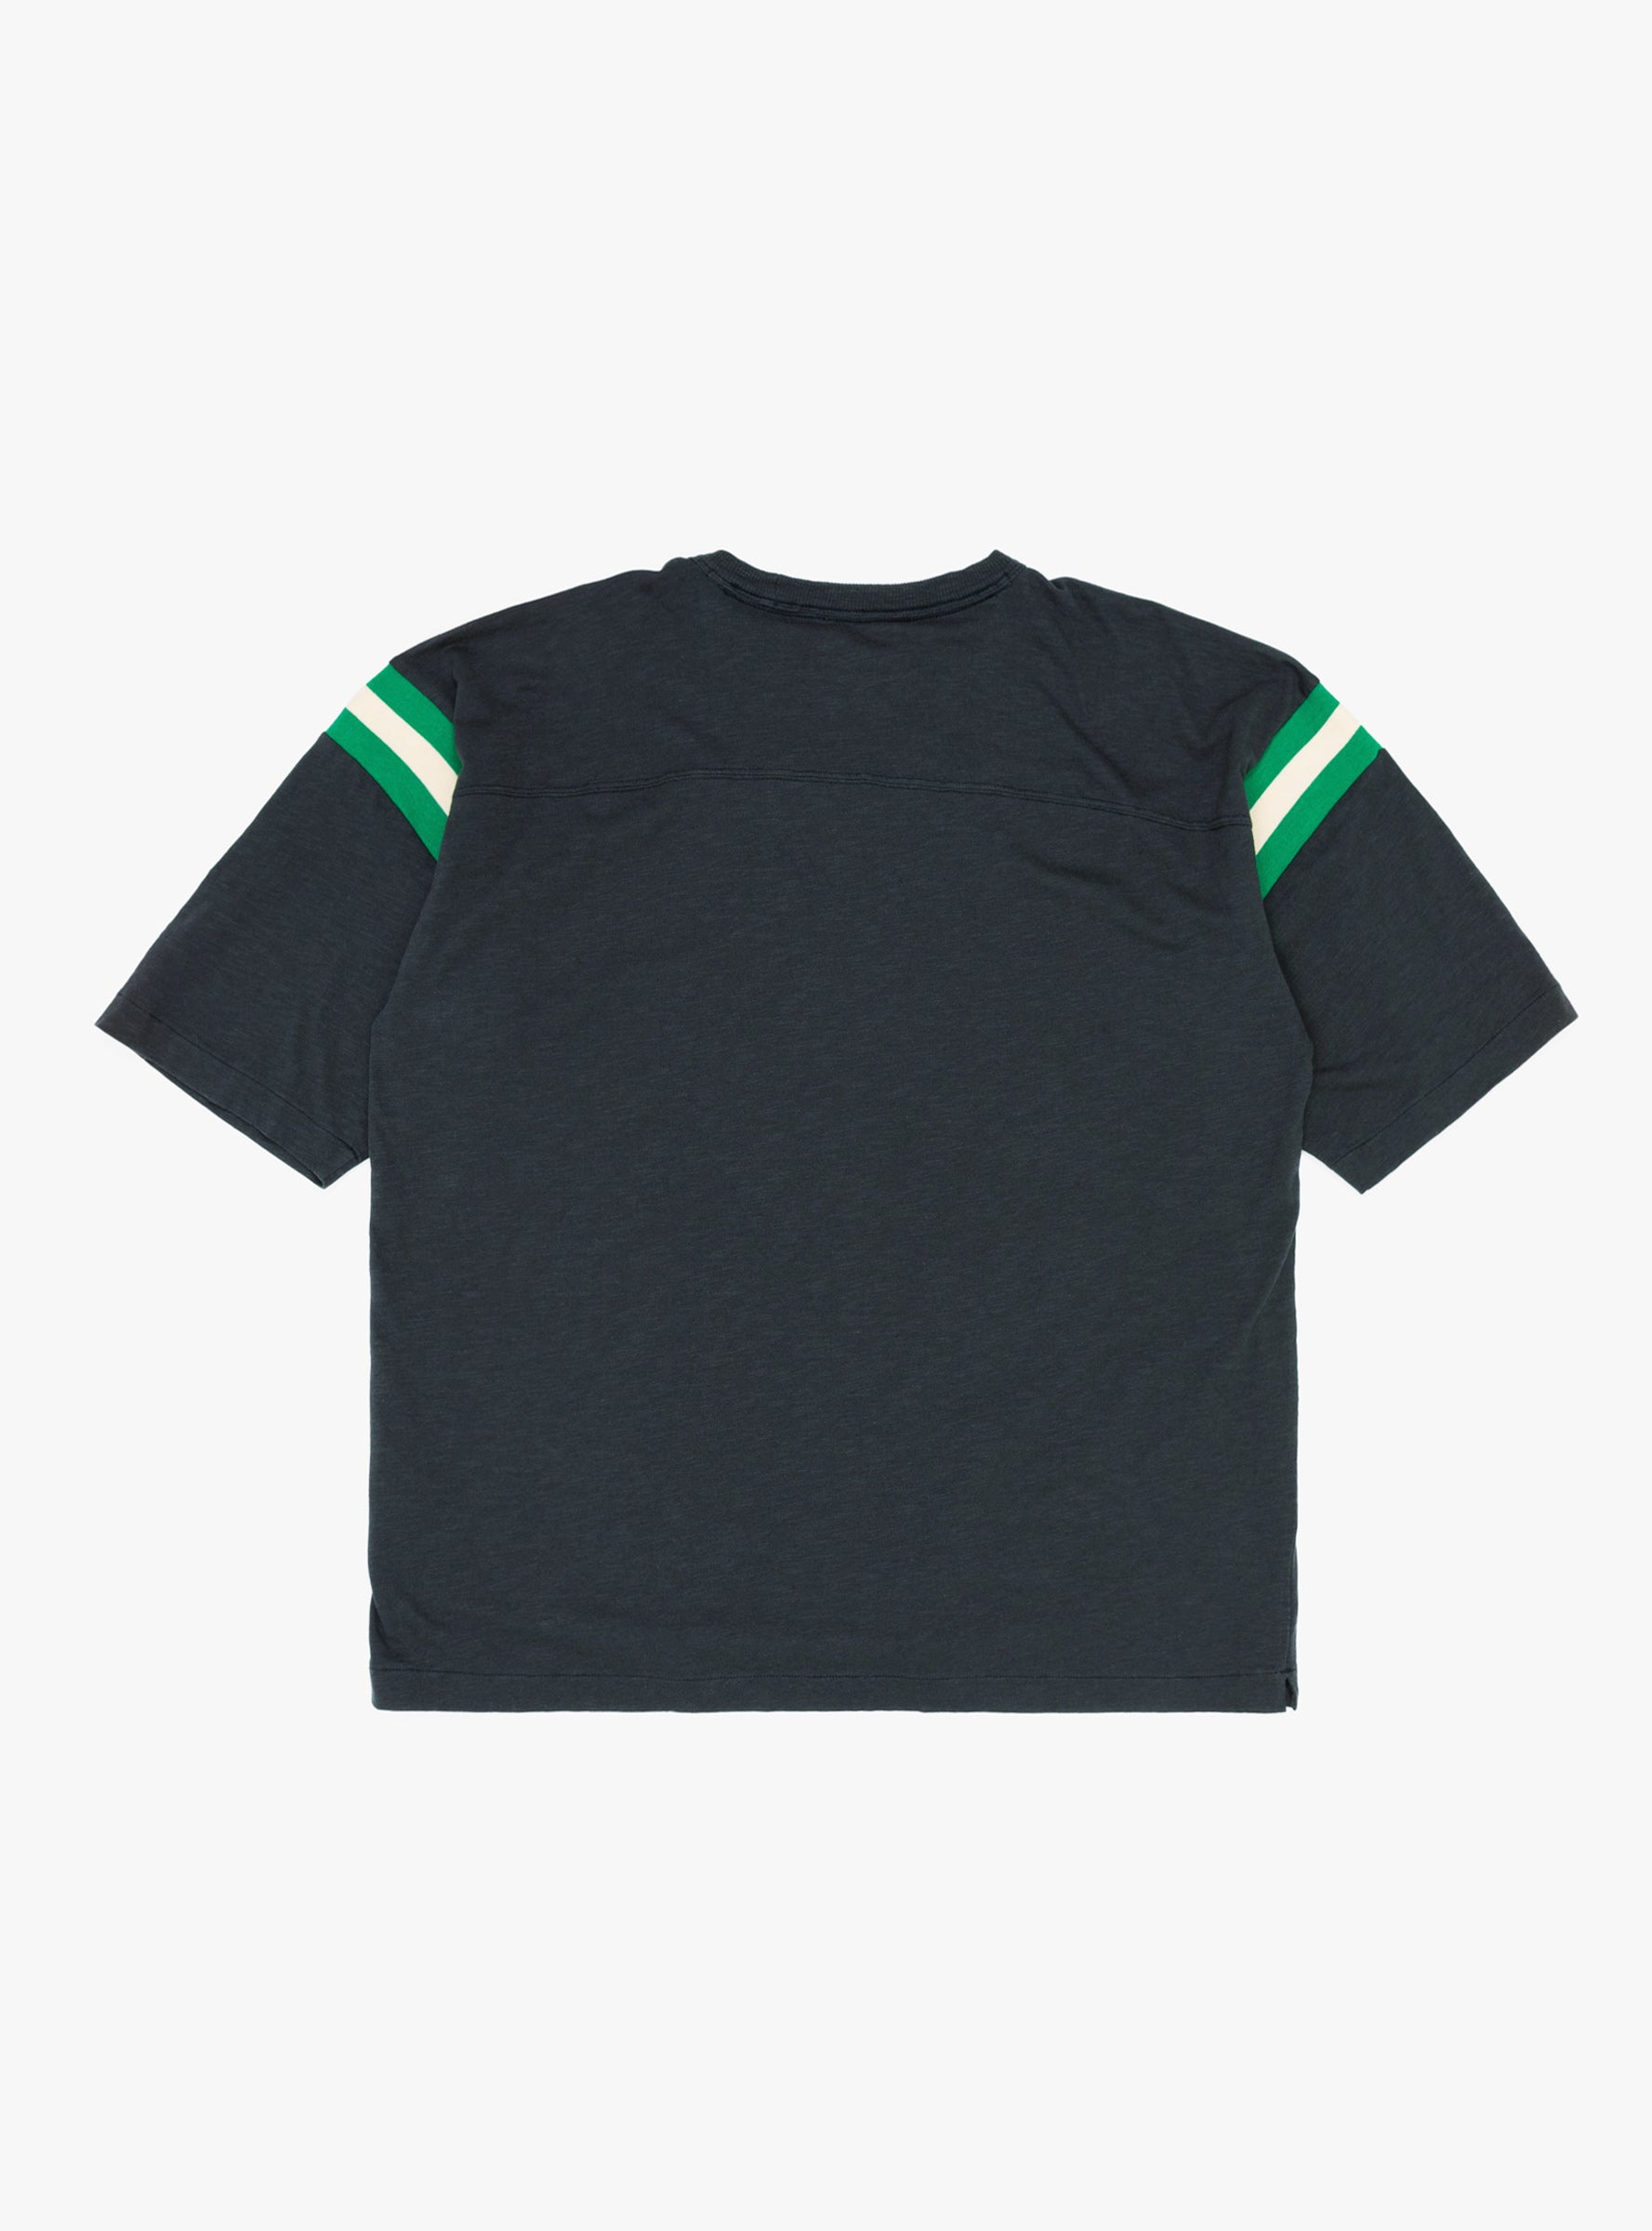 Ymc YMC Skate T-Shirt Black & Green - Size: Large